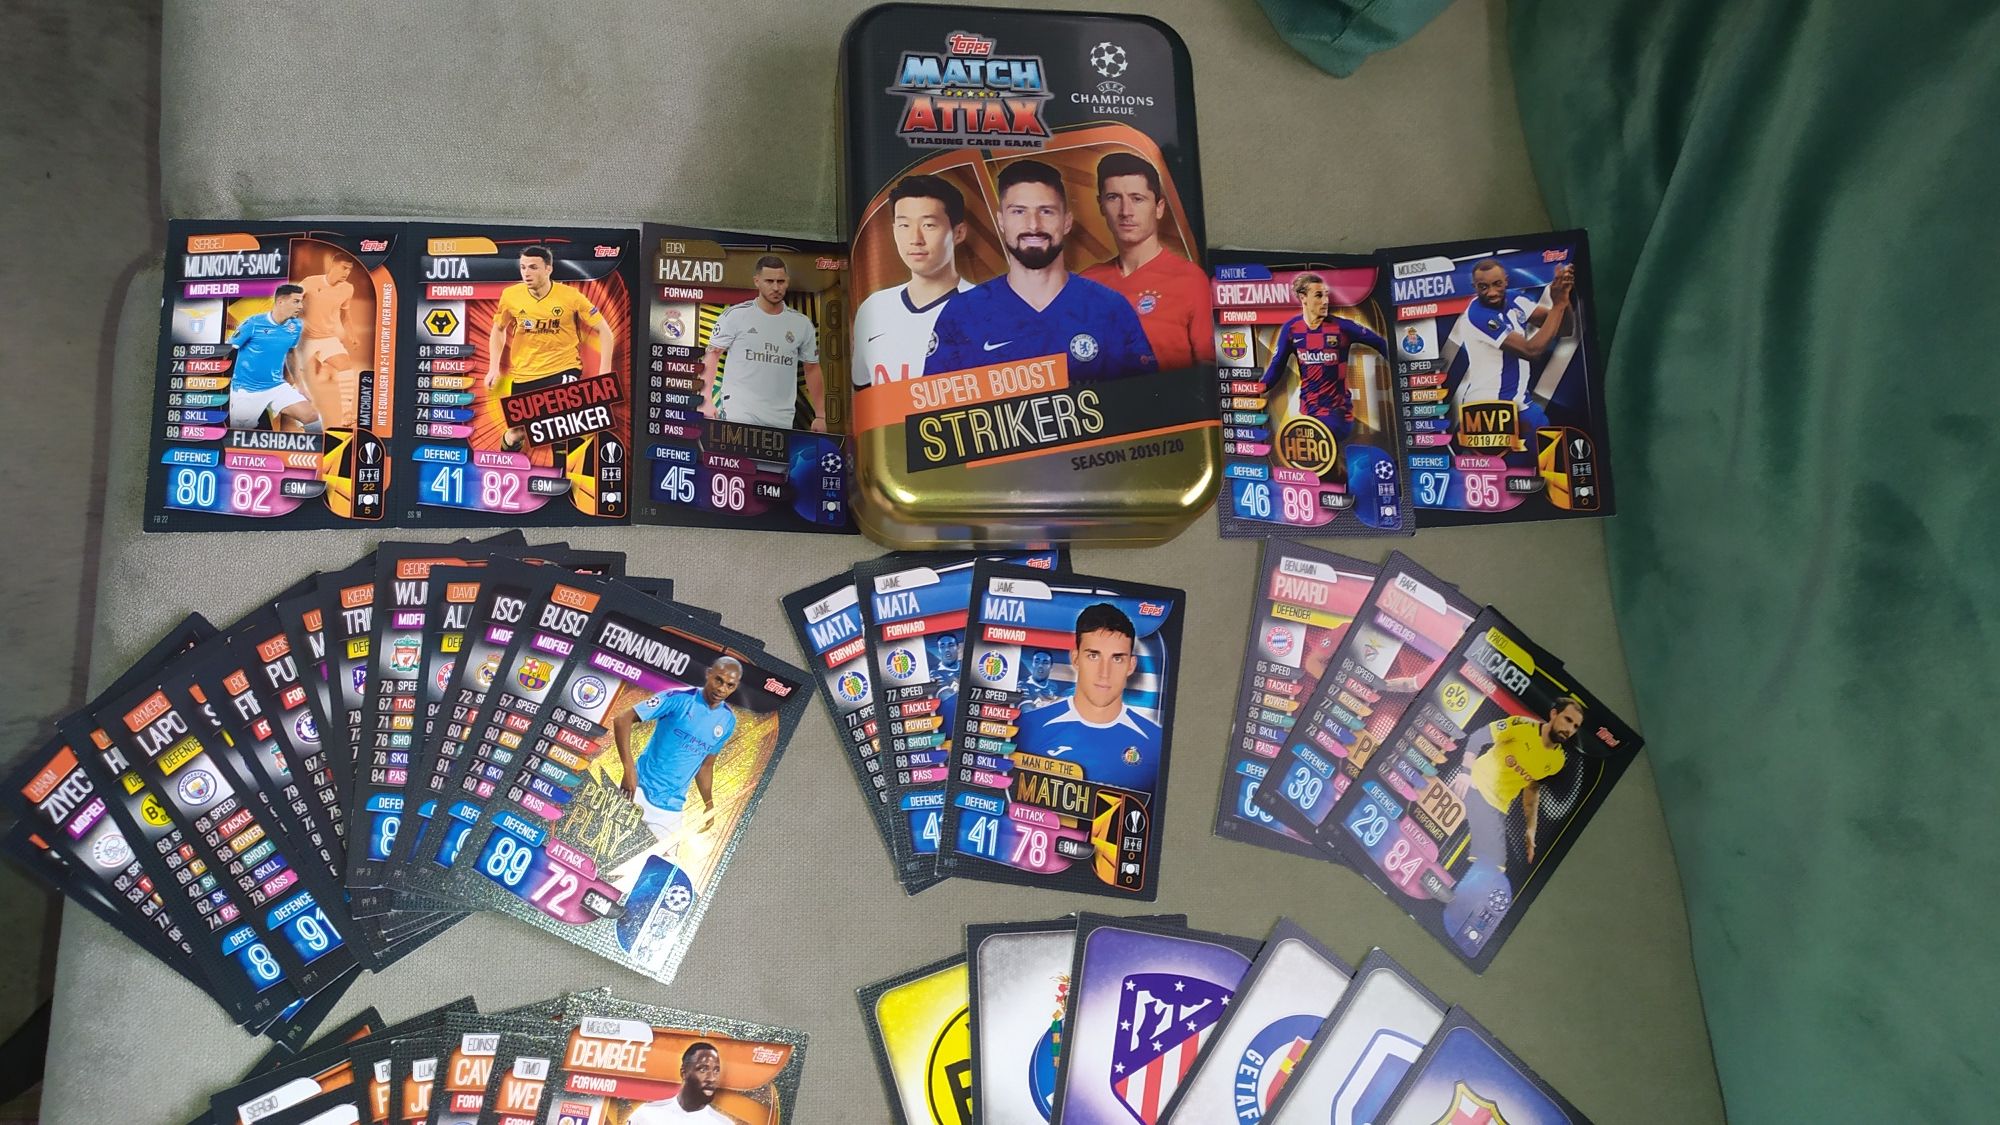 Caixa com 145 cartas MATCH ATTAX super Boost strikers season 2019/20